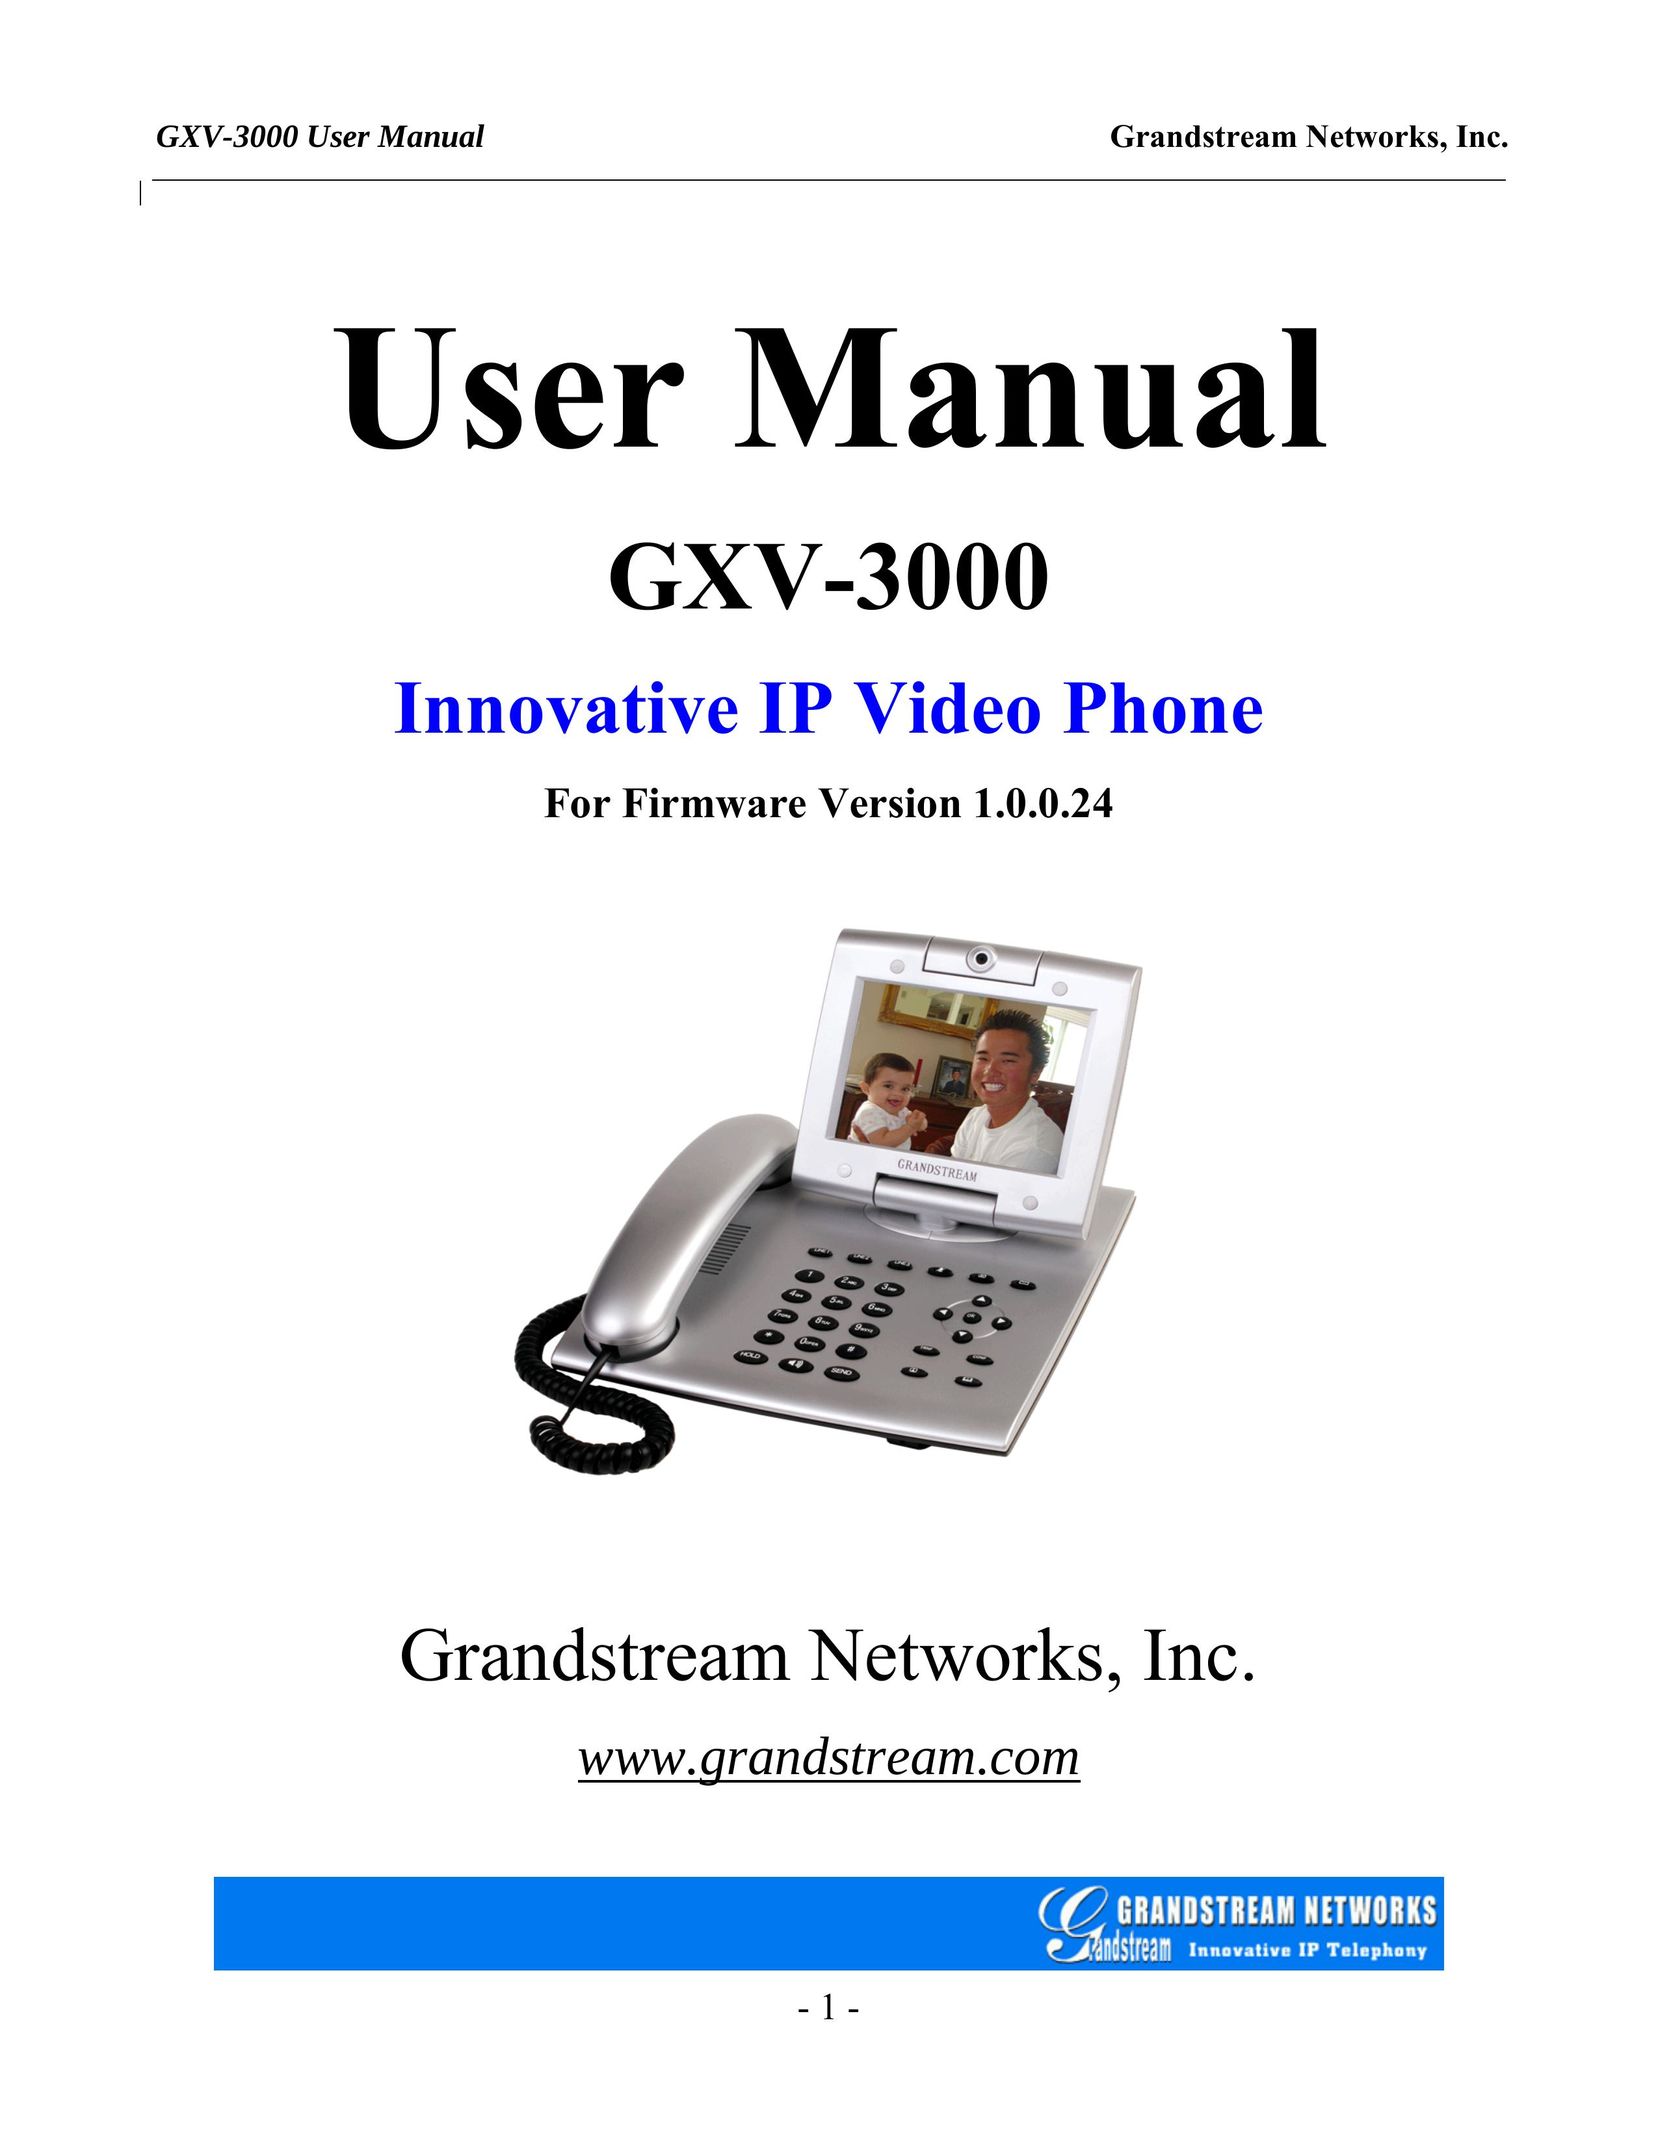 Grandstream Networks GXV-3000 Answering Machine User Manual